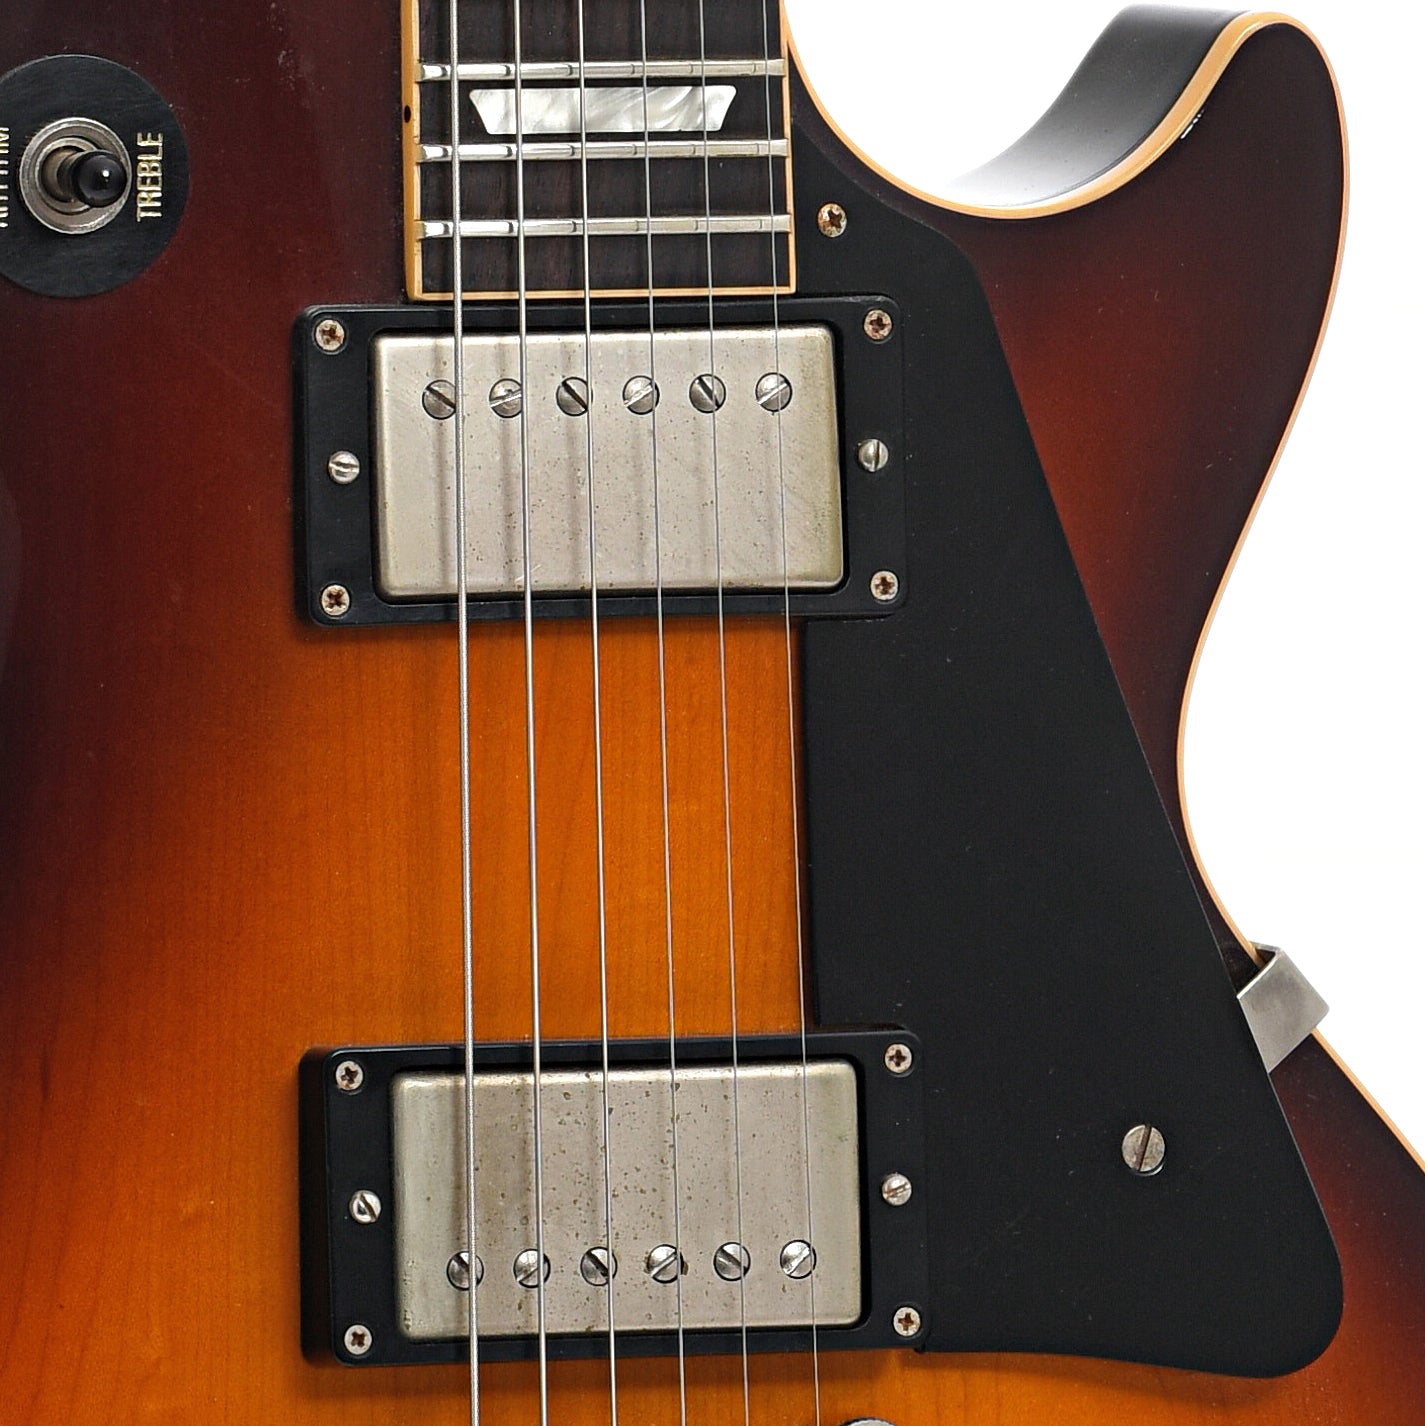 Pickups of Gibson Joe Bonamassa Les Paul Electric Guitar (2011)